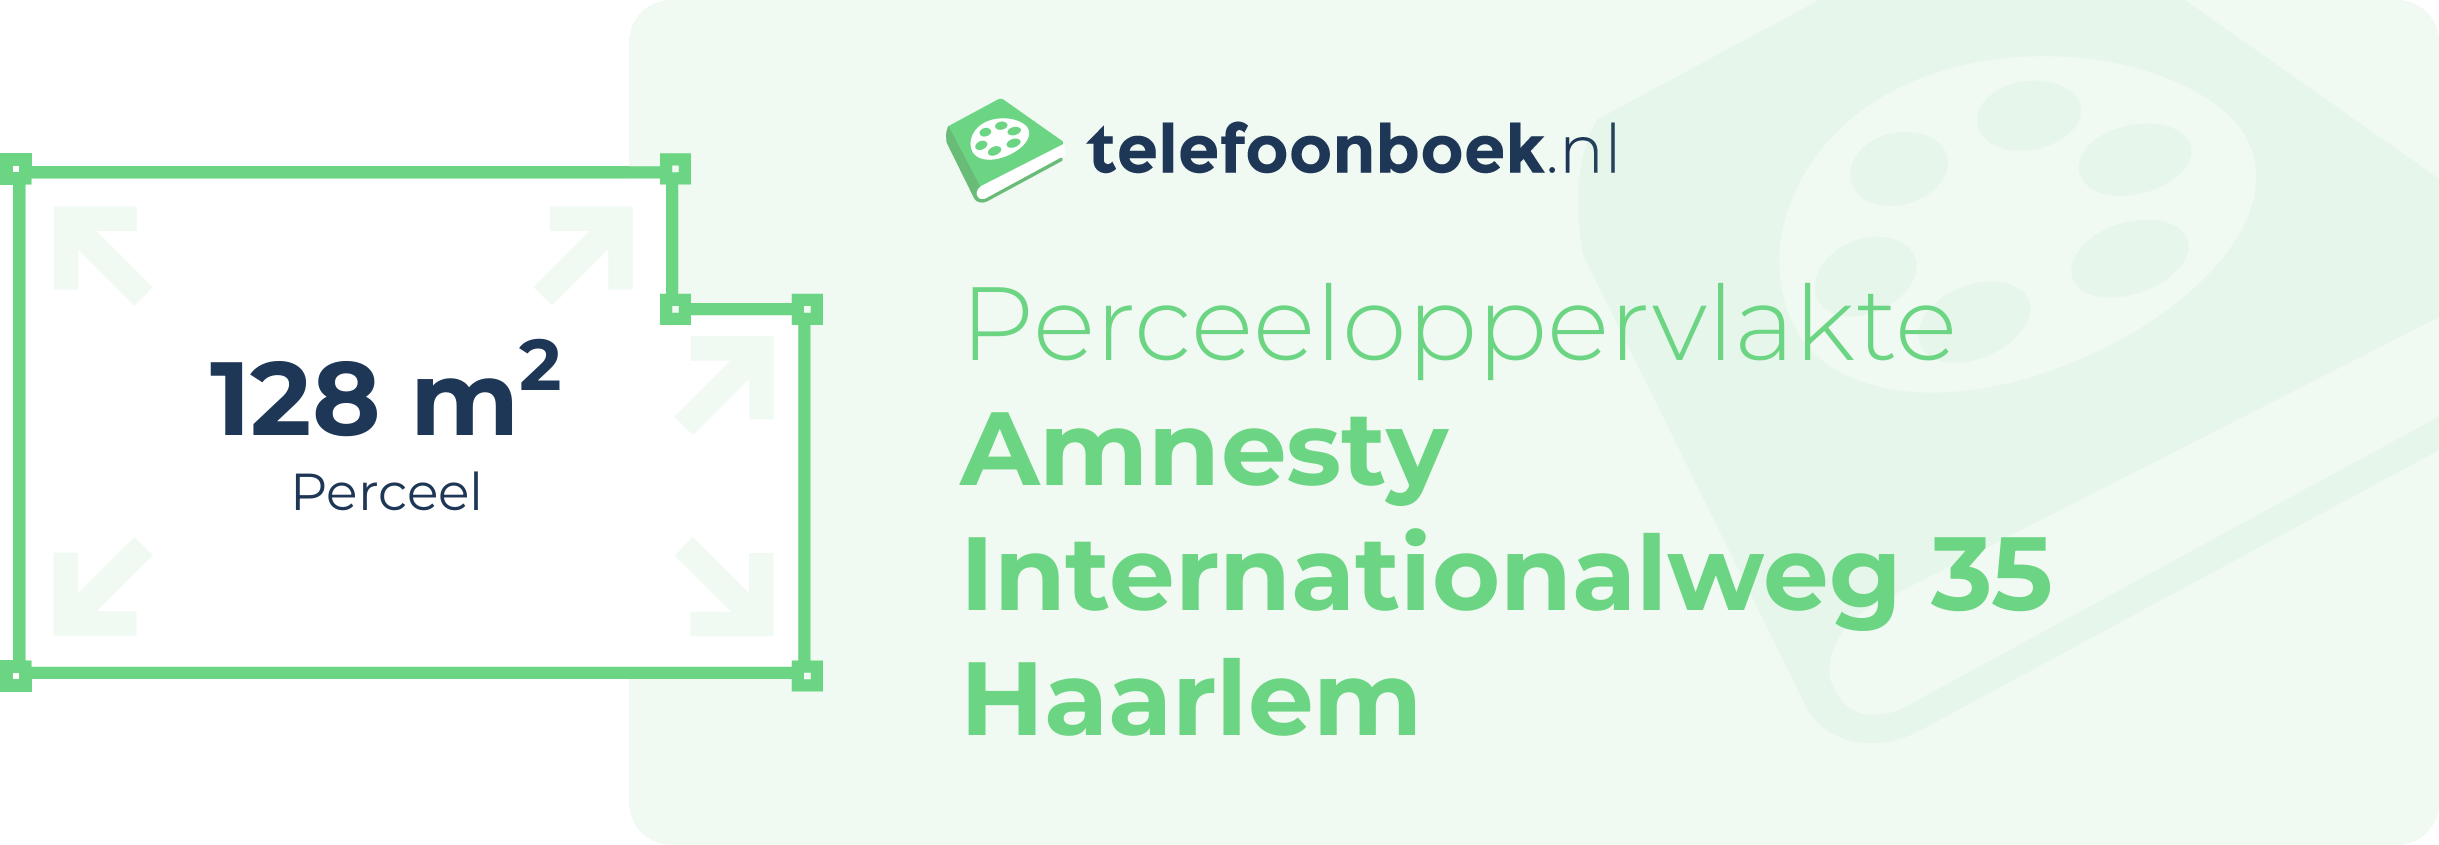 Perceeloppervlakte Amnesty Internationalweg 35 Haarlem